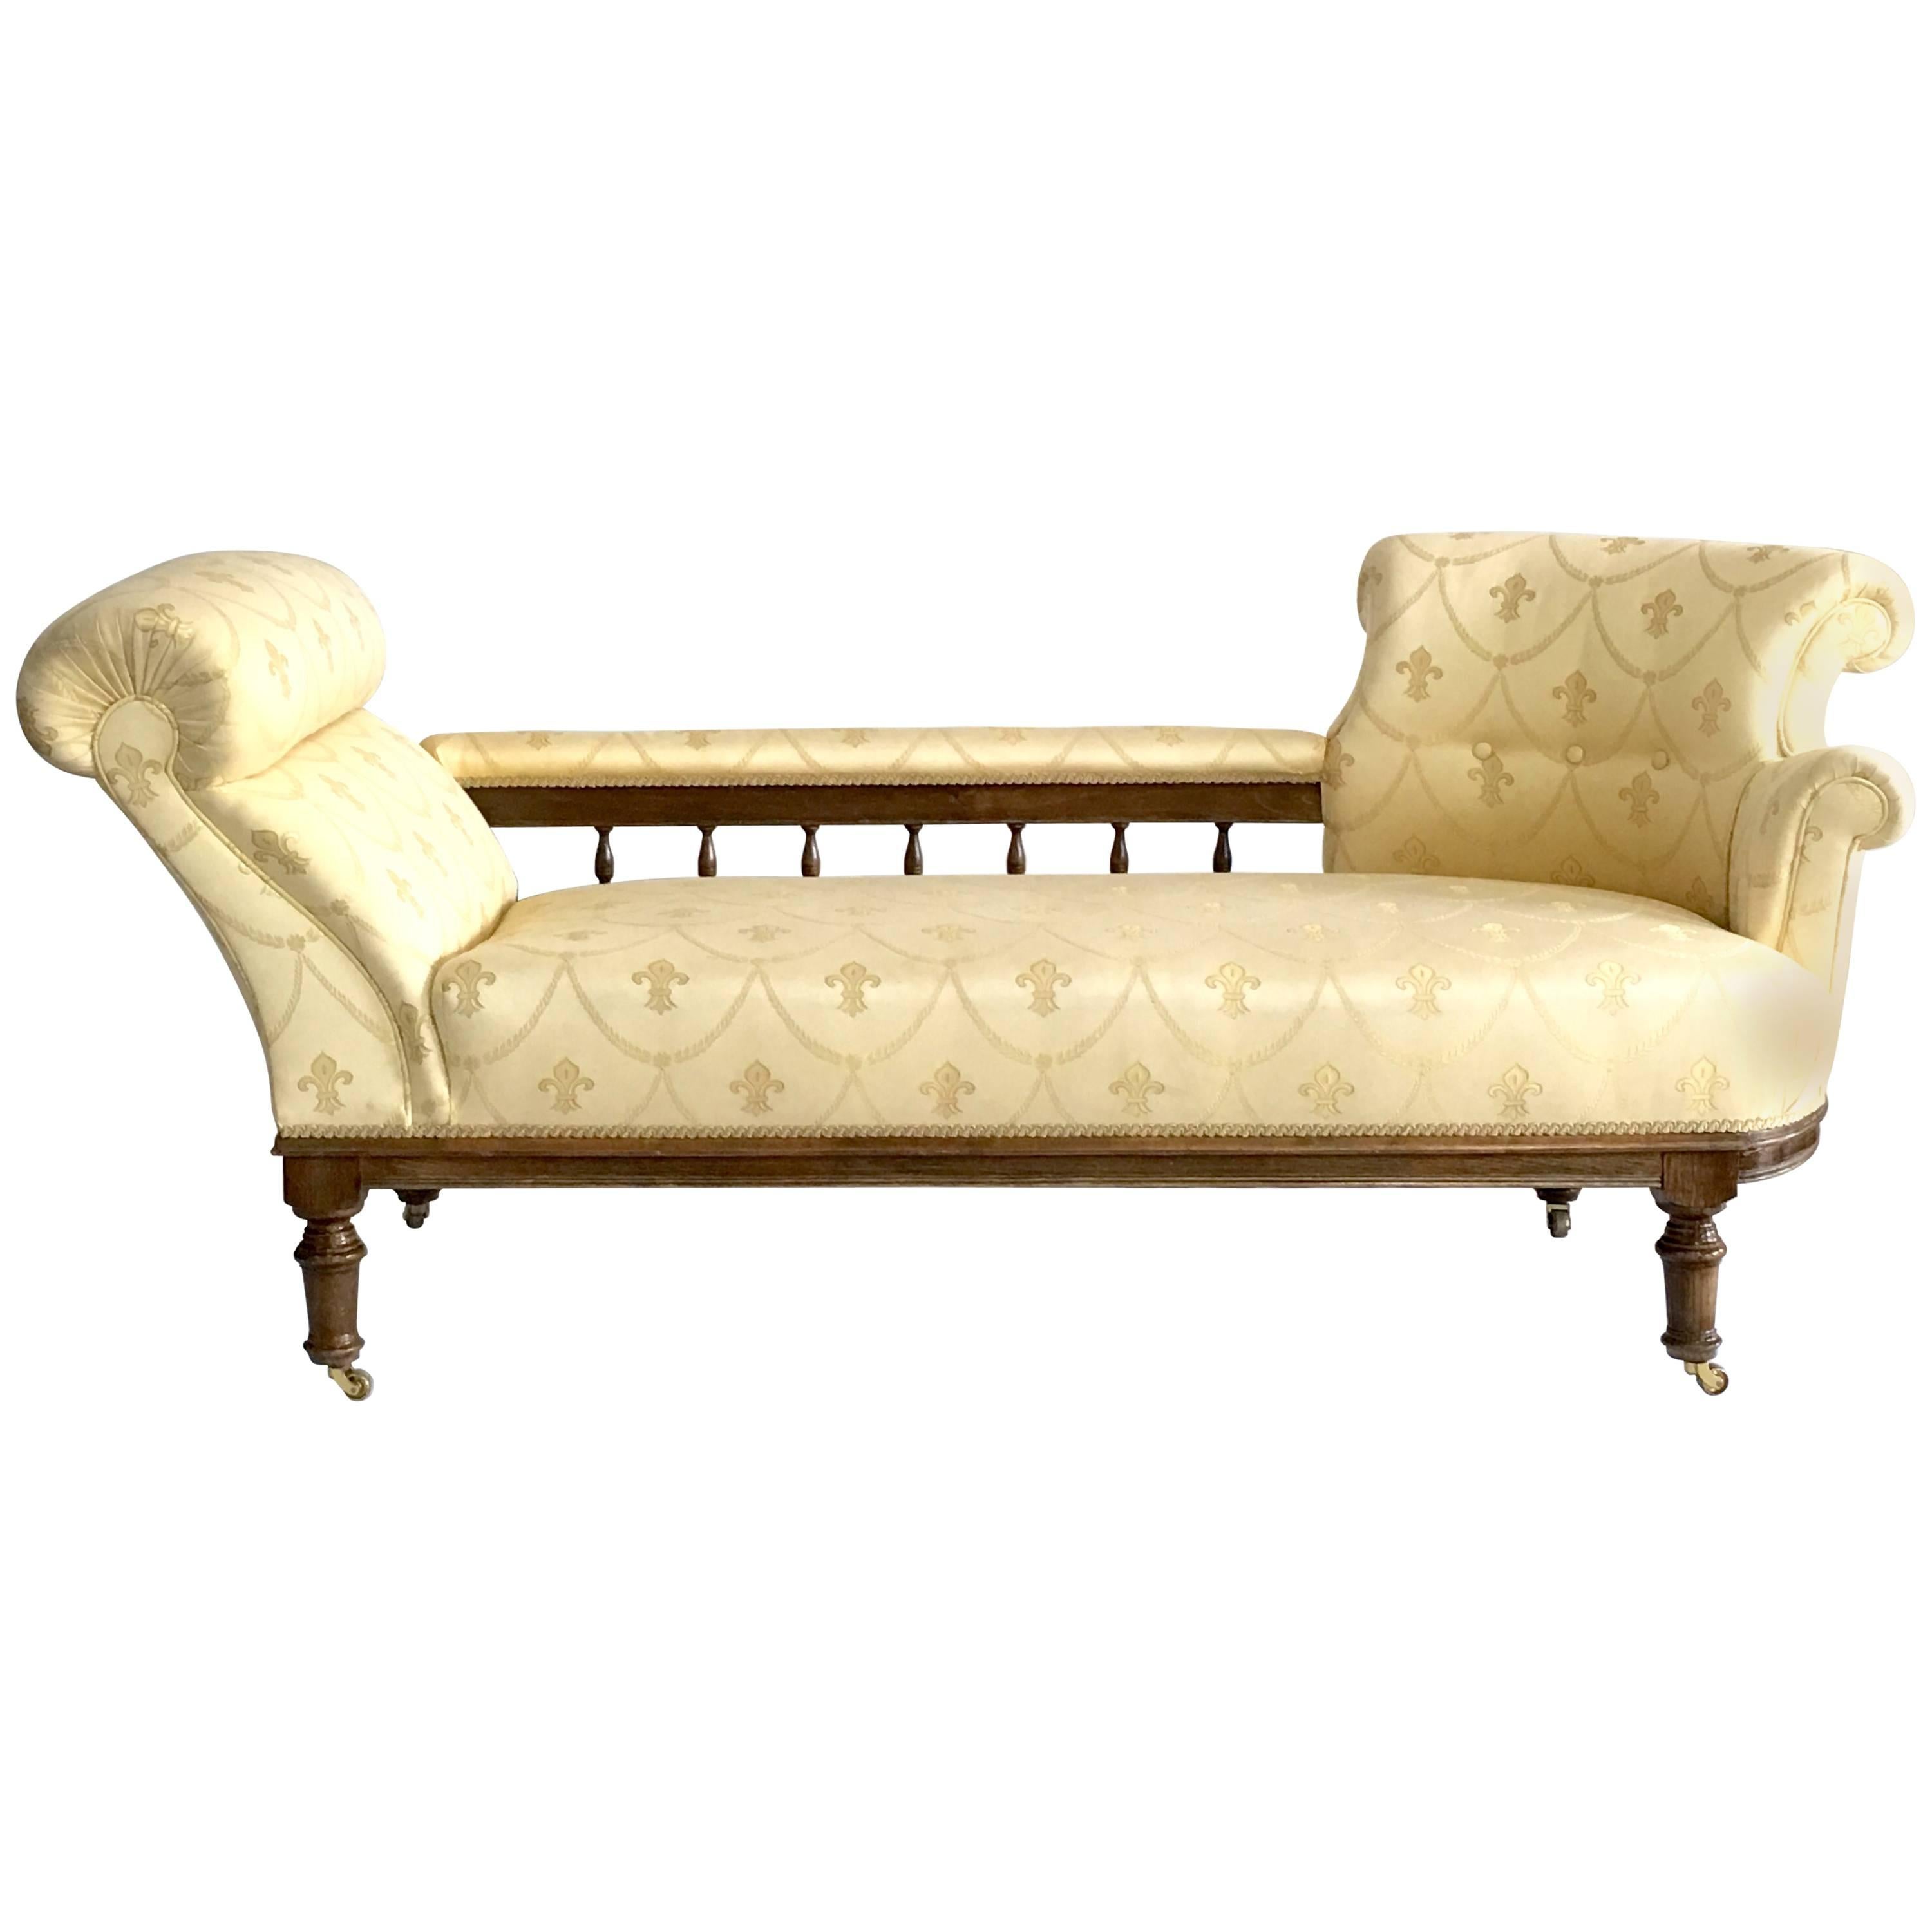 1940's English Regency Upholstered Walnut Chaise Lounge